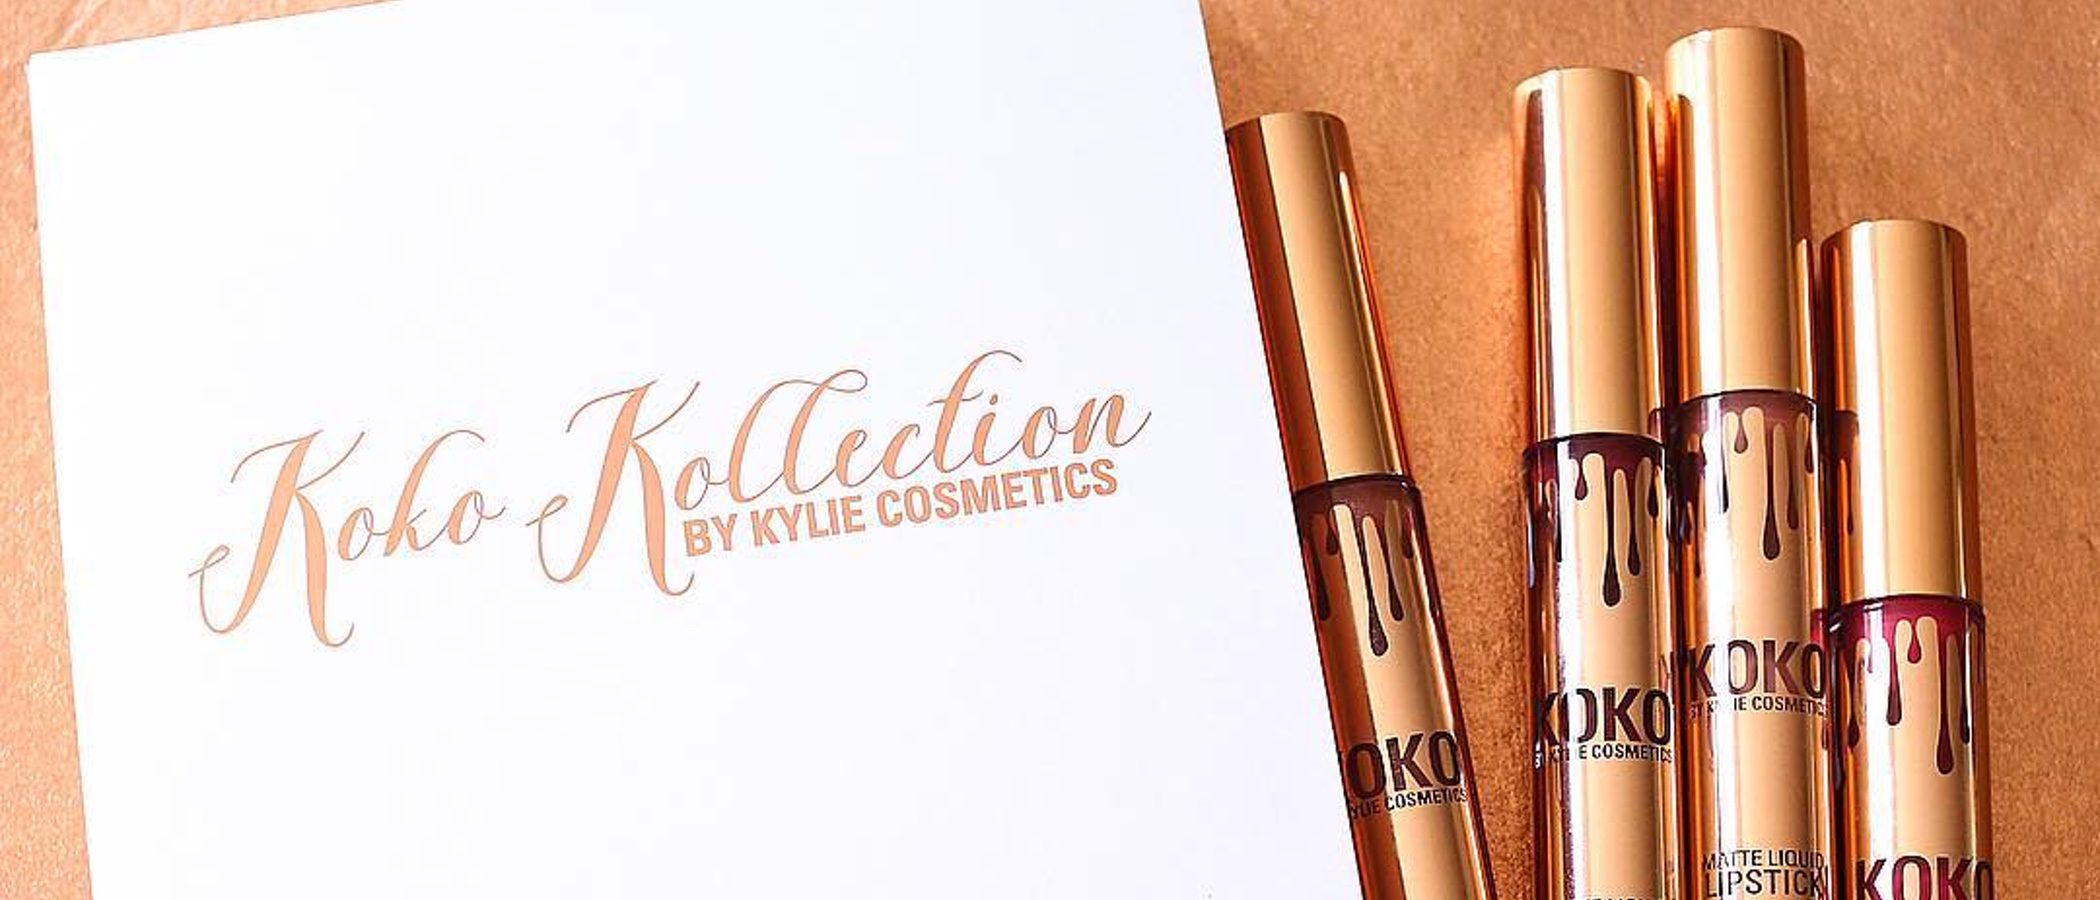 Kylie Jenner y Khloé Kardashian se unen para crear 'The Koko Kollection'